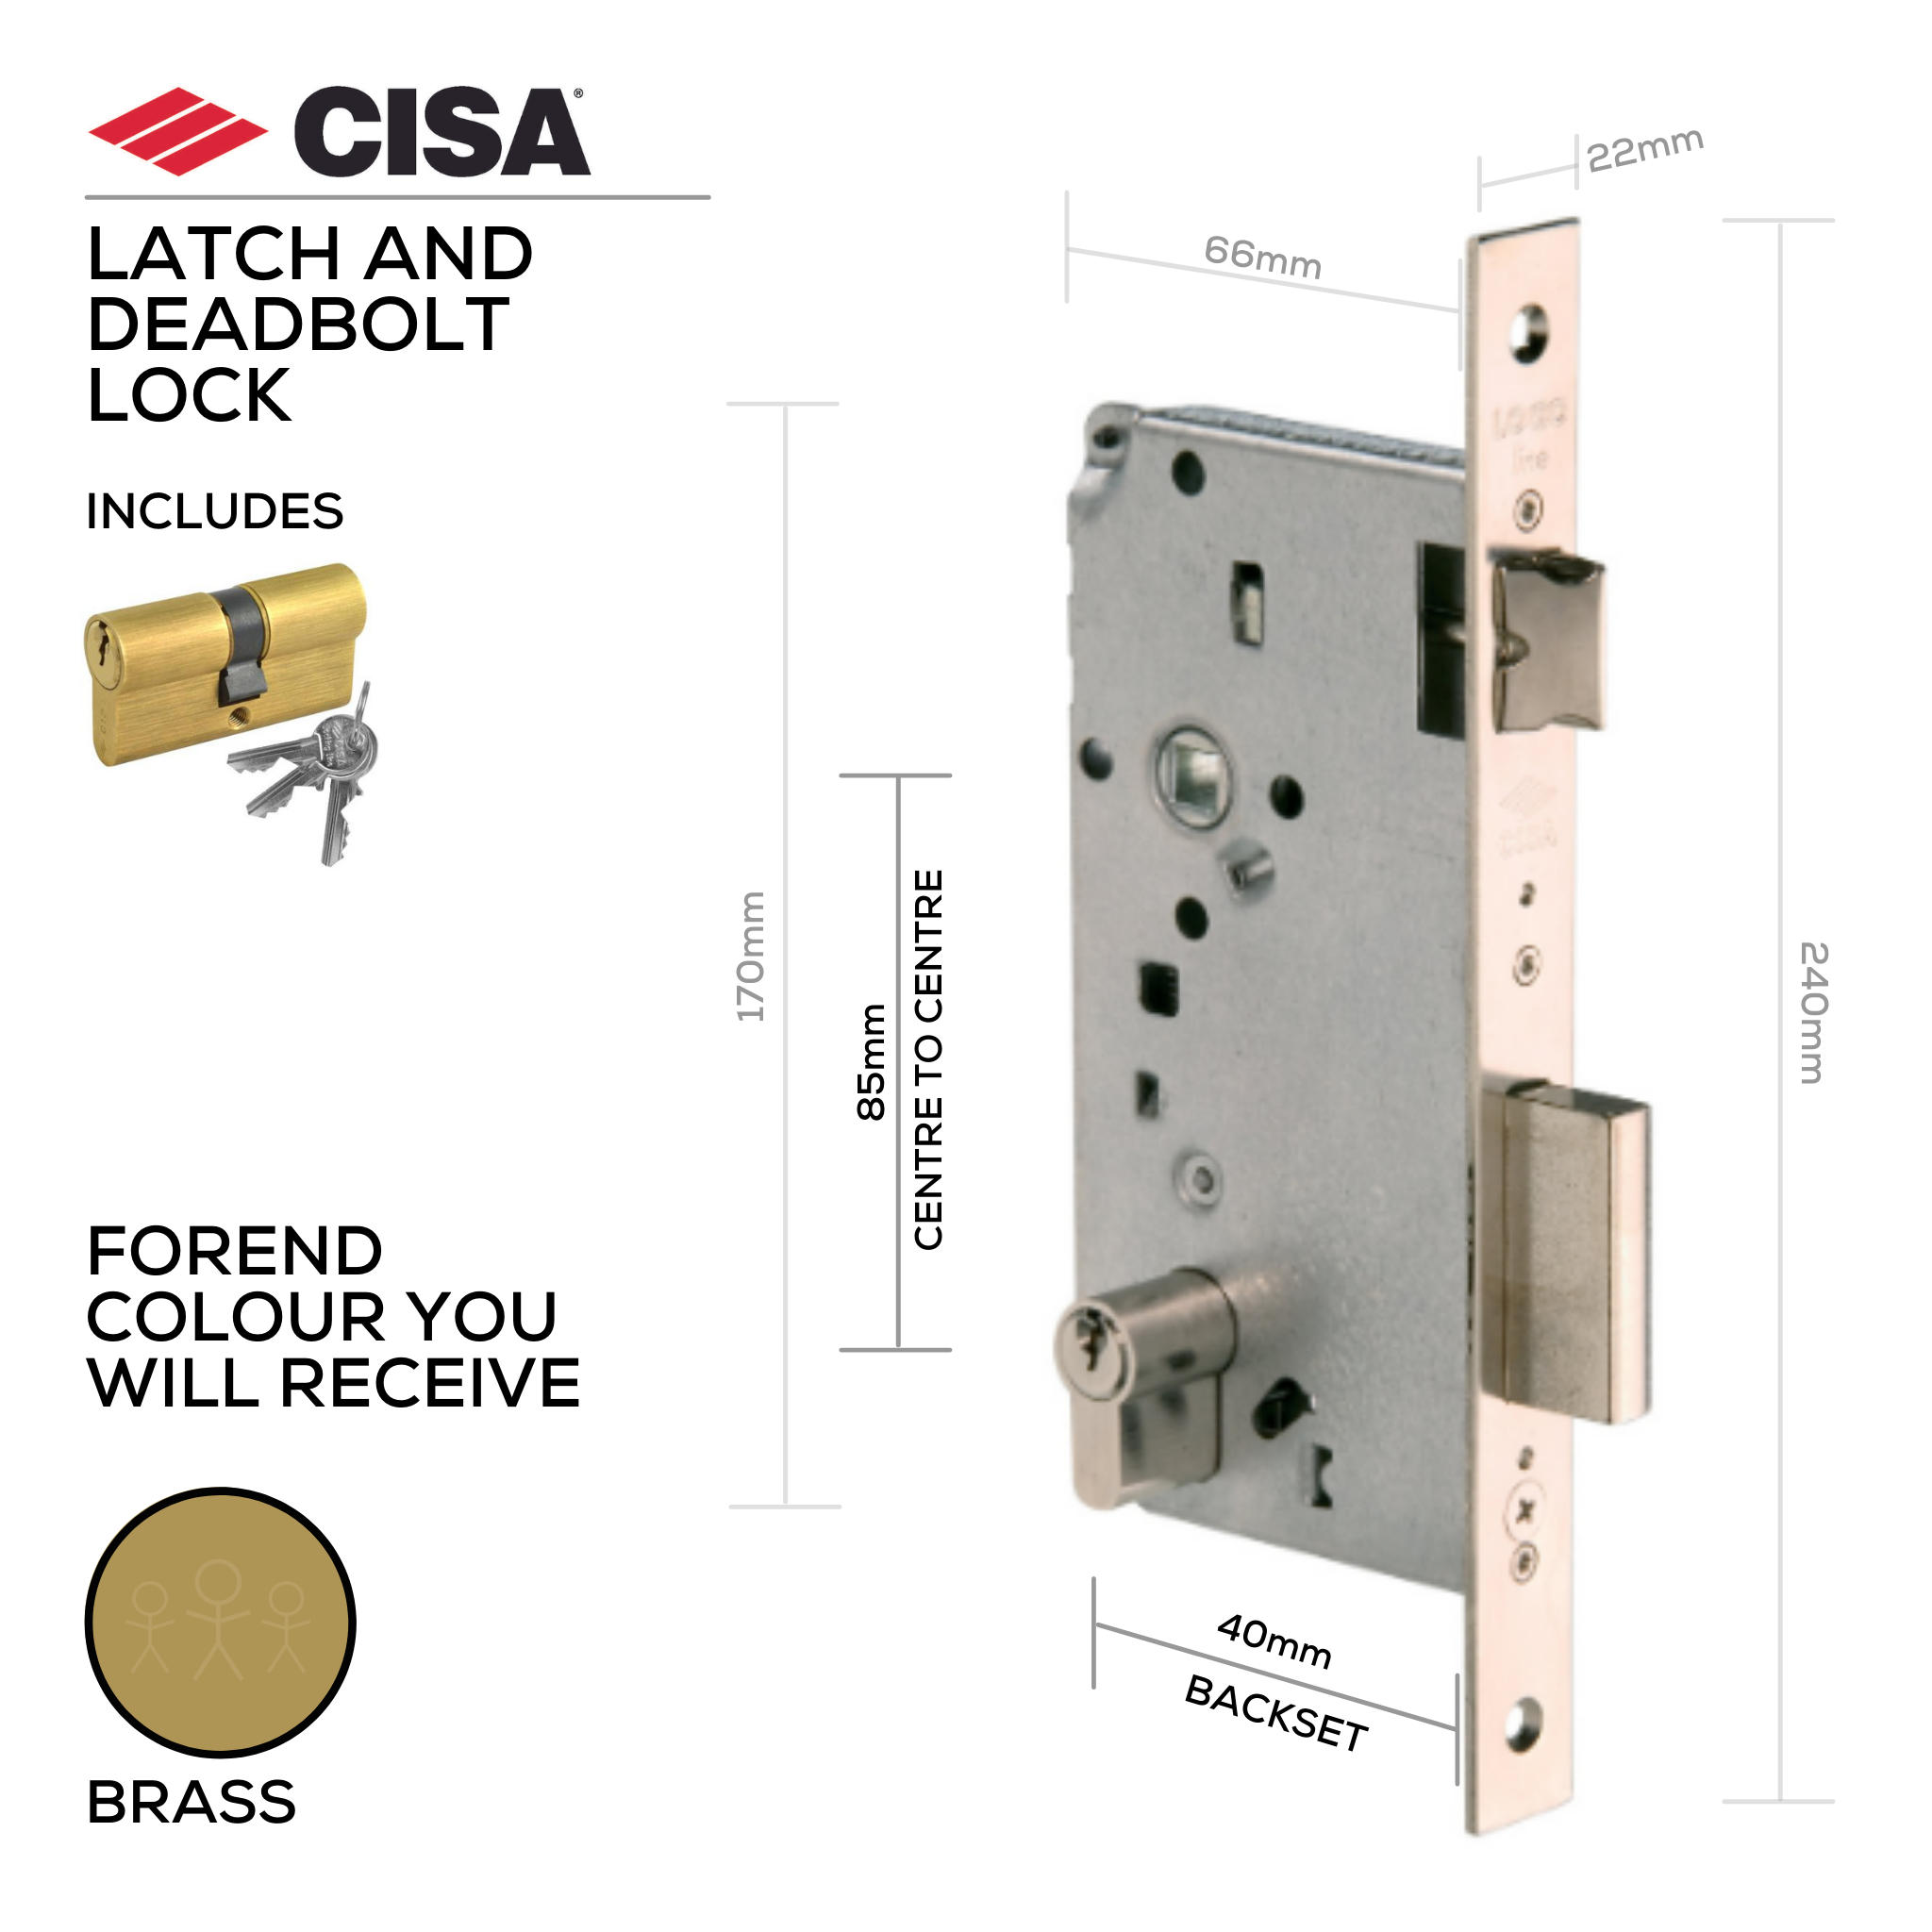 5C611-40-00_W/Cylinder, Latch & Deadbolt Lock, Euro Cylinder, Including Cylinder, 08010-07, 3 Keys - 5 Pins, 40mm (Backset), 85mm (ctc), Brass, CISA